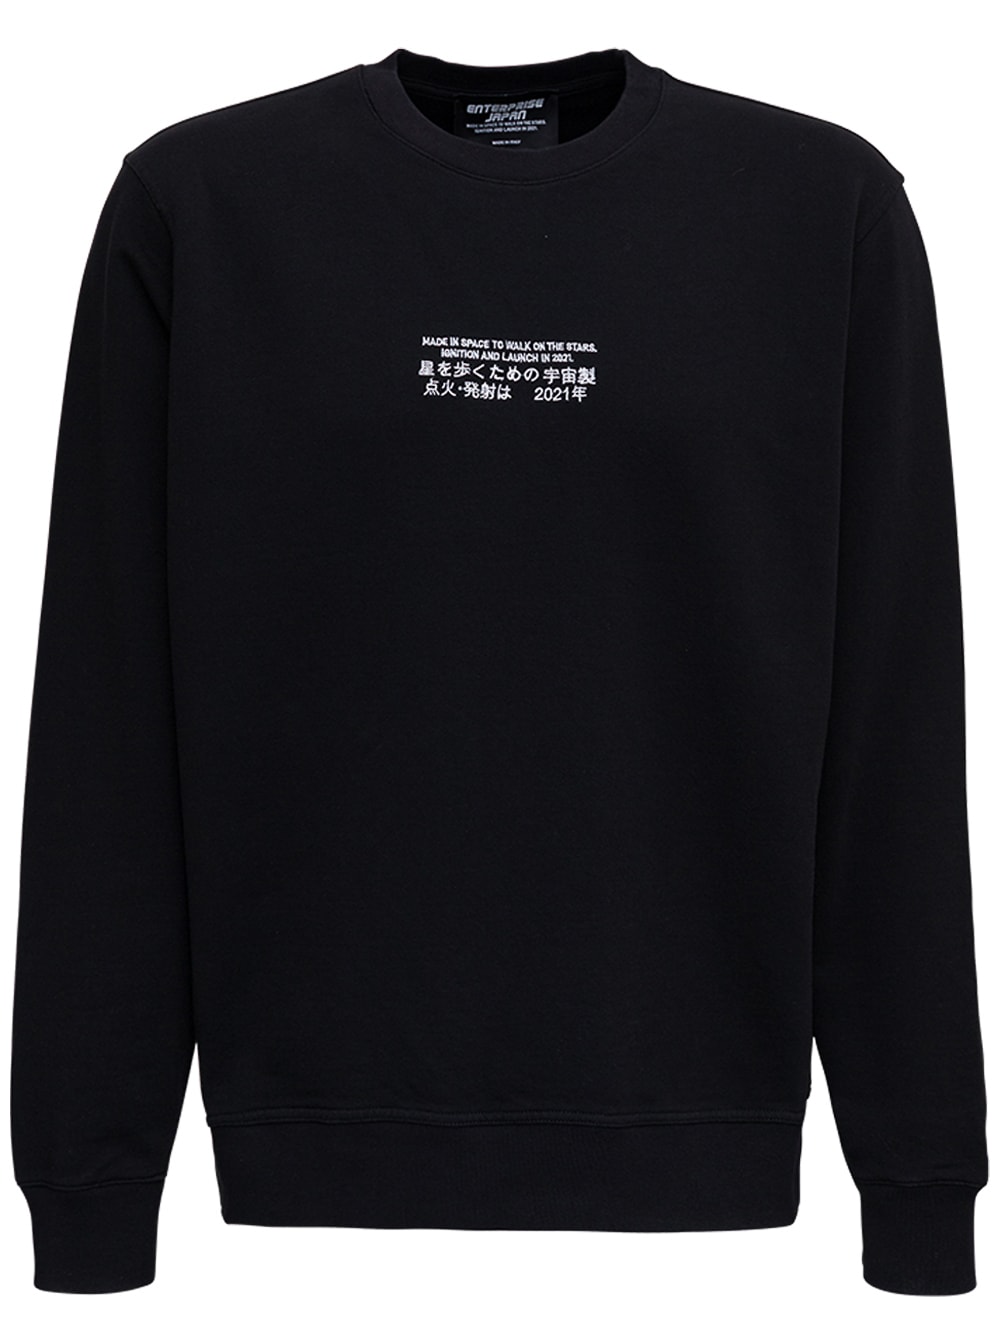 Enterprise Japan Black Cotton Sweatshirt With Print